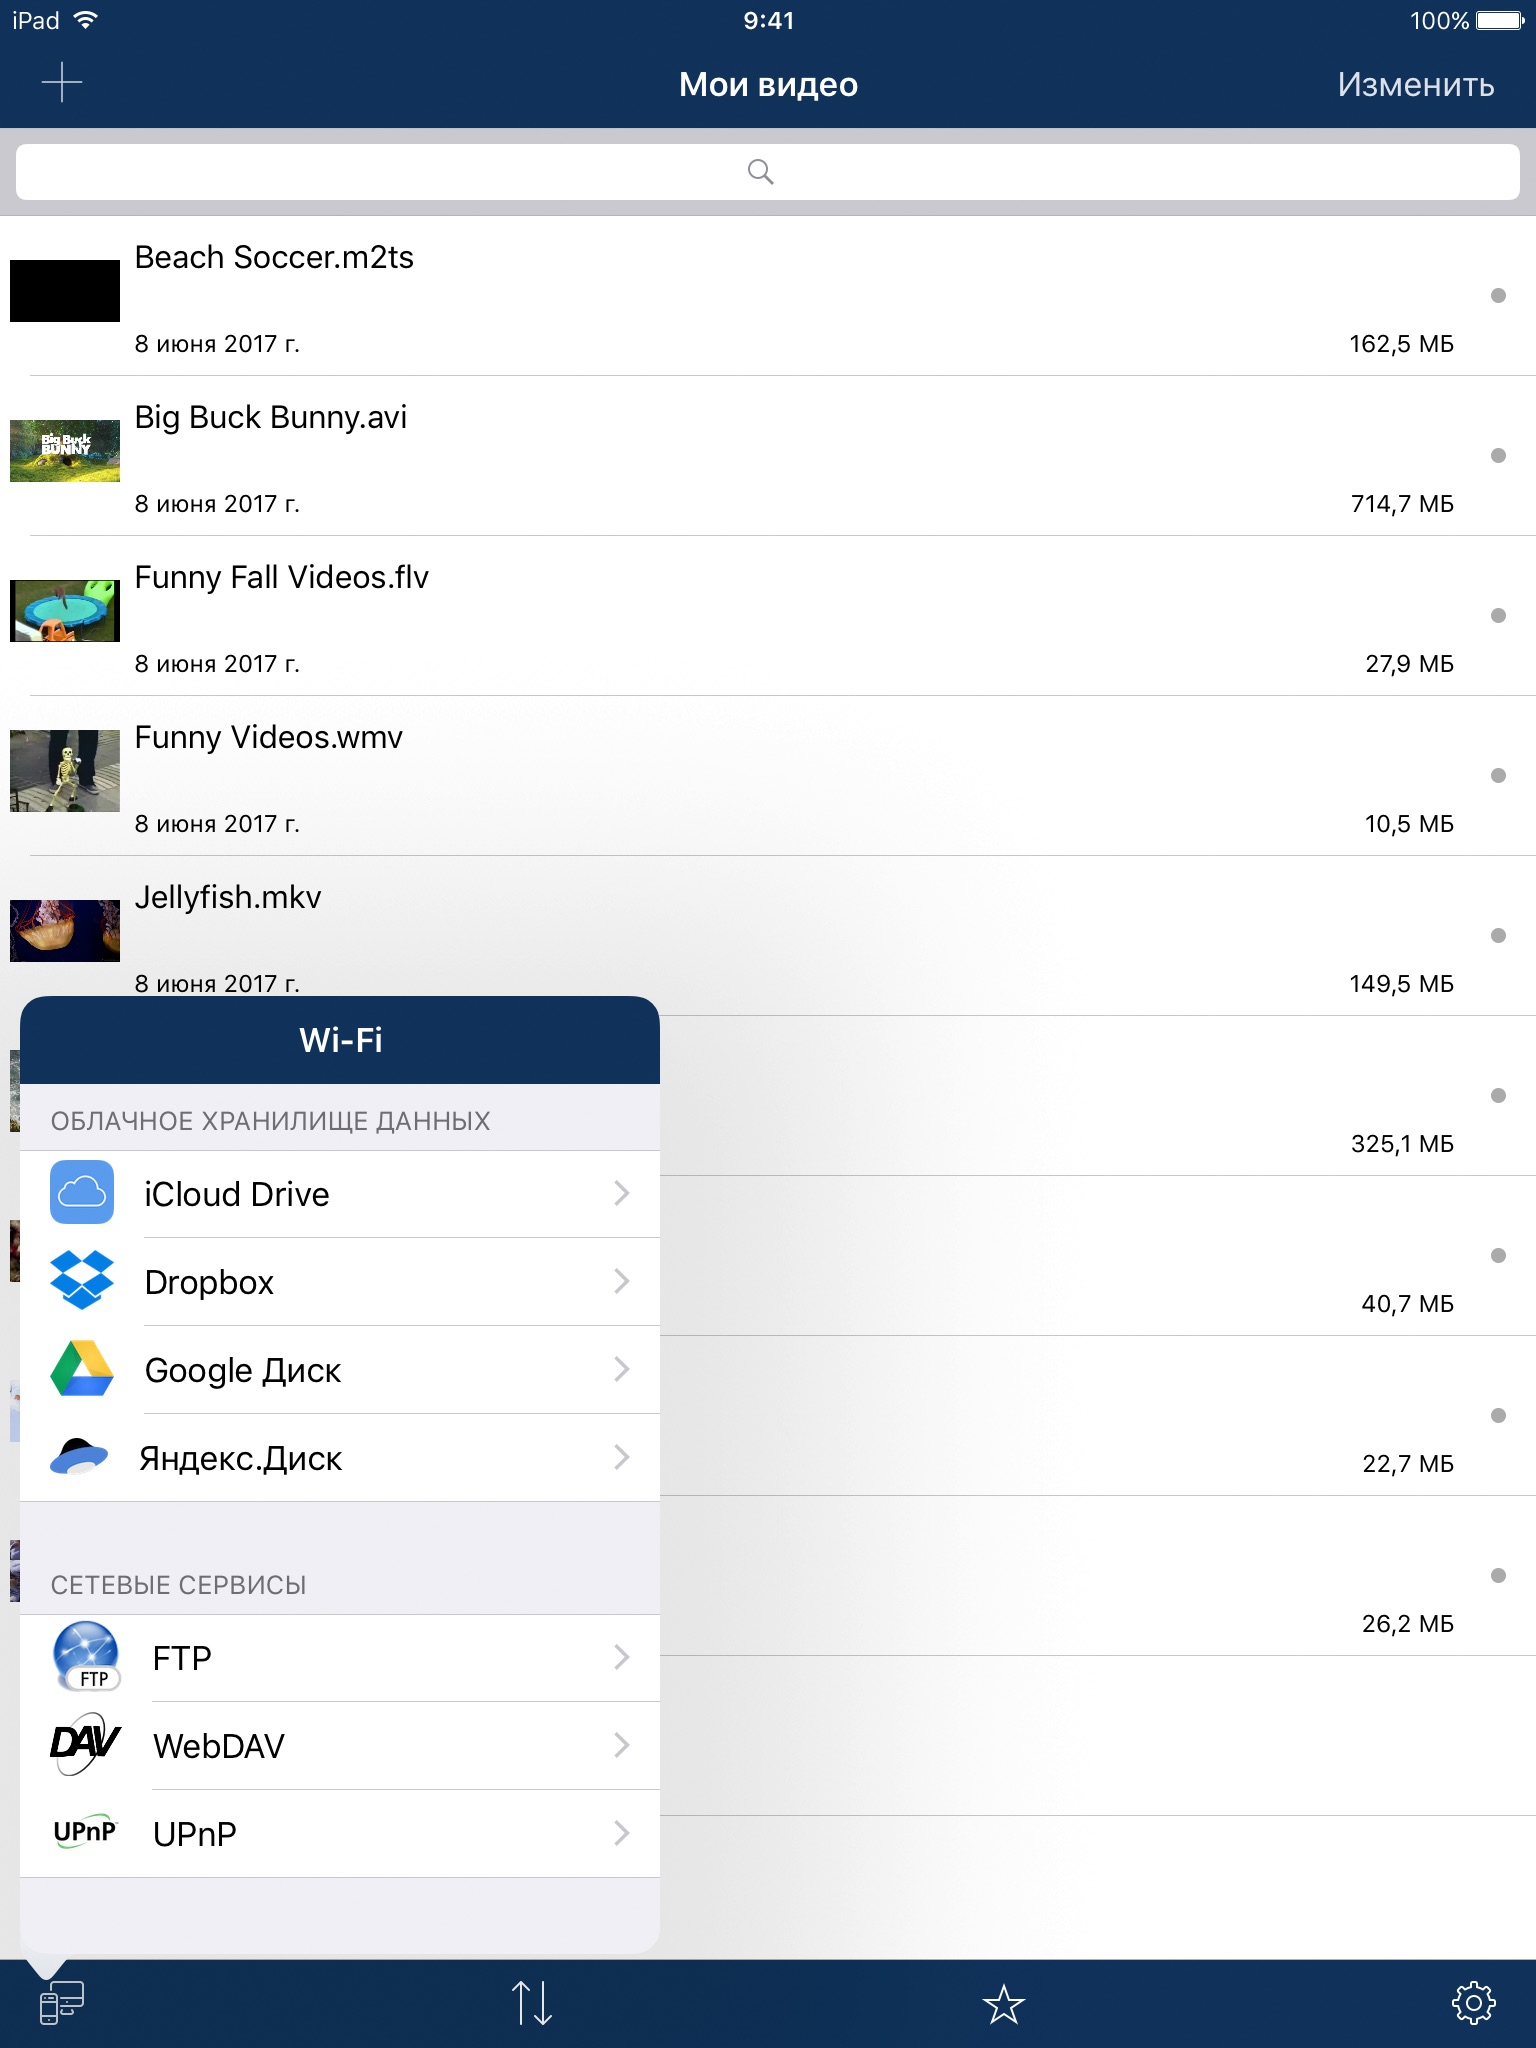 AVPlayer for iPad screenshot 4